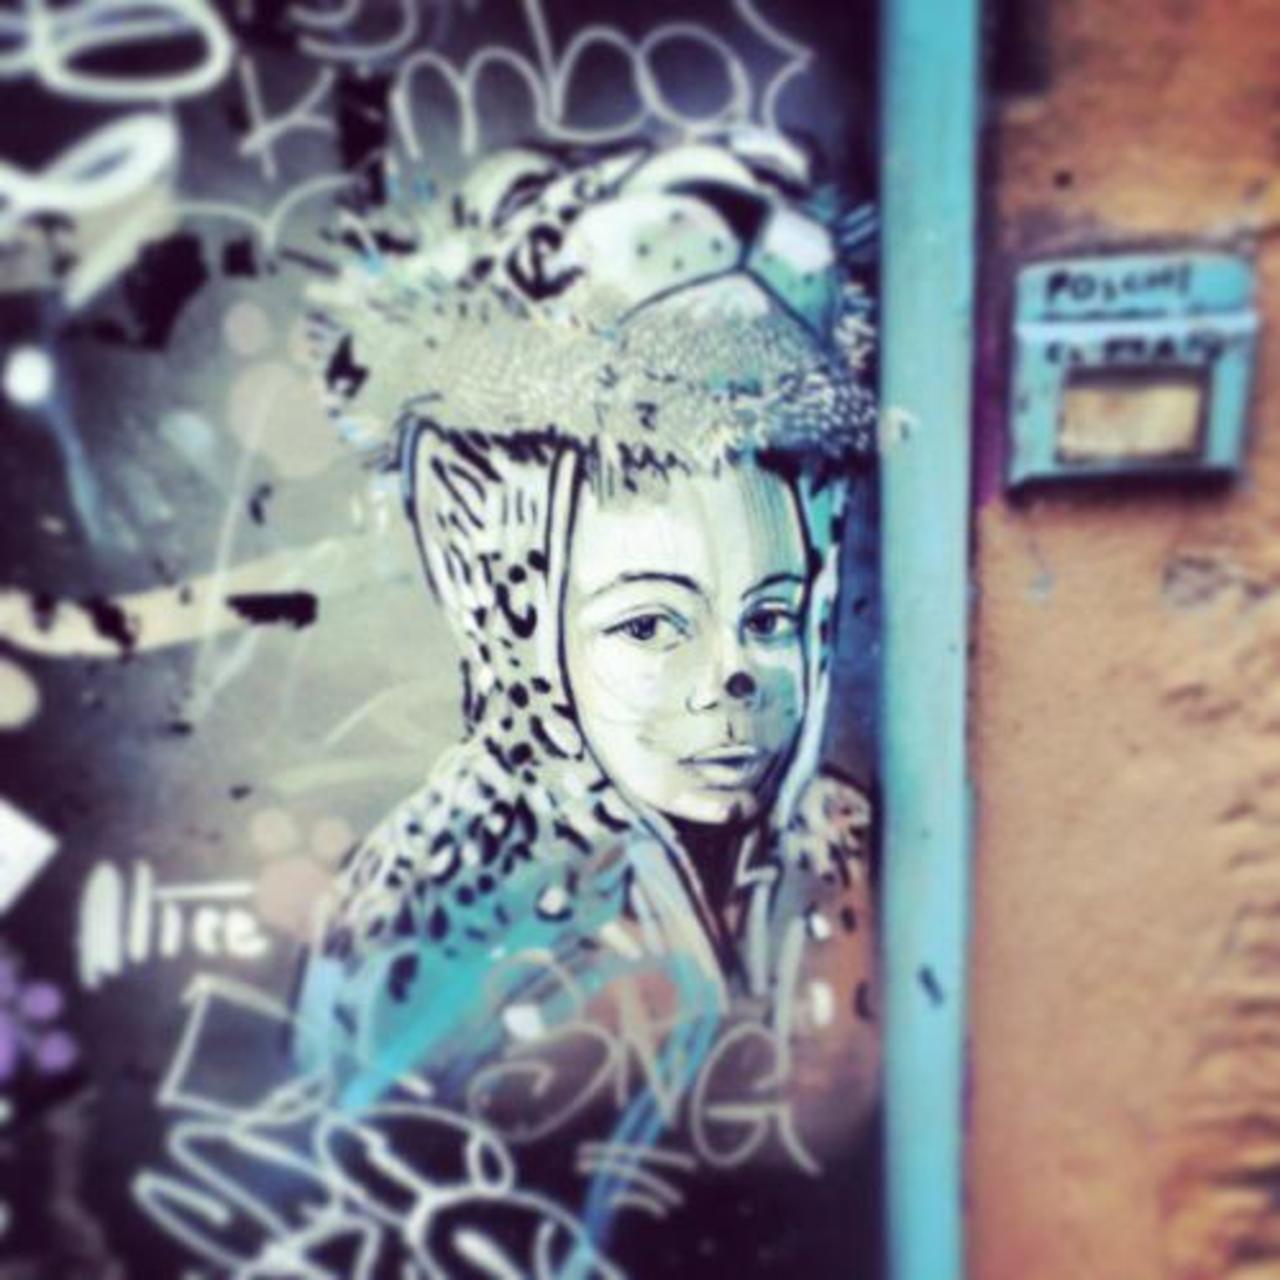 New #Alicè in @Bologna #streetart #graffiti by marzianatn... http://ift.tt/1MI4oxa #alicepasquini http://t.co/6IhzhYkDjt